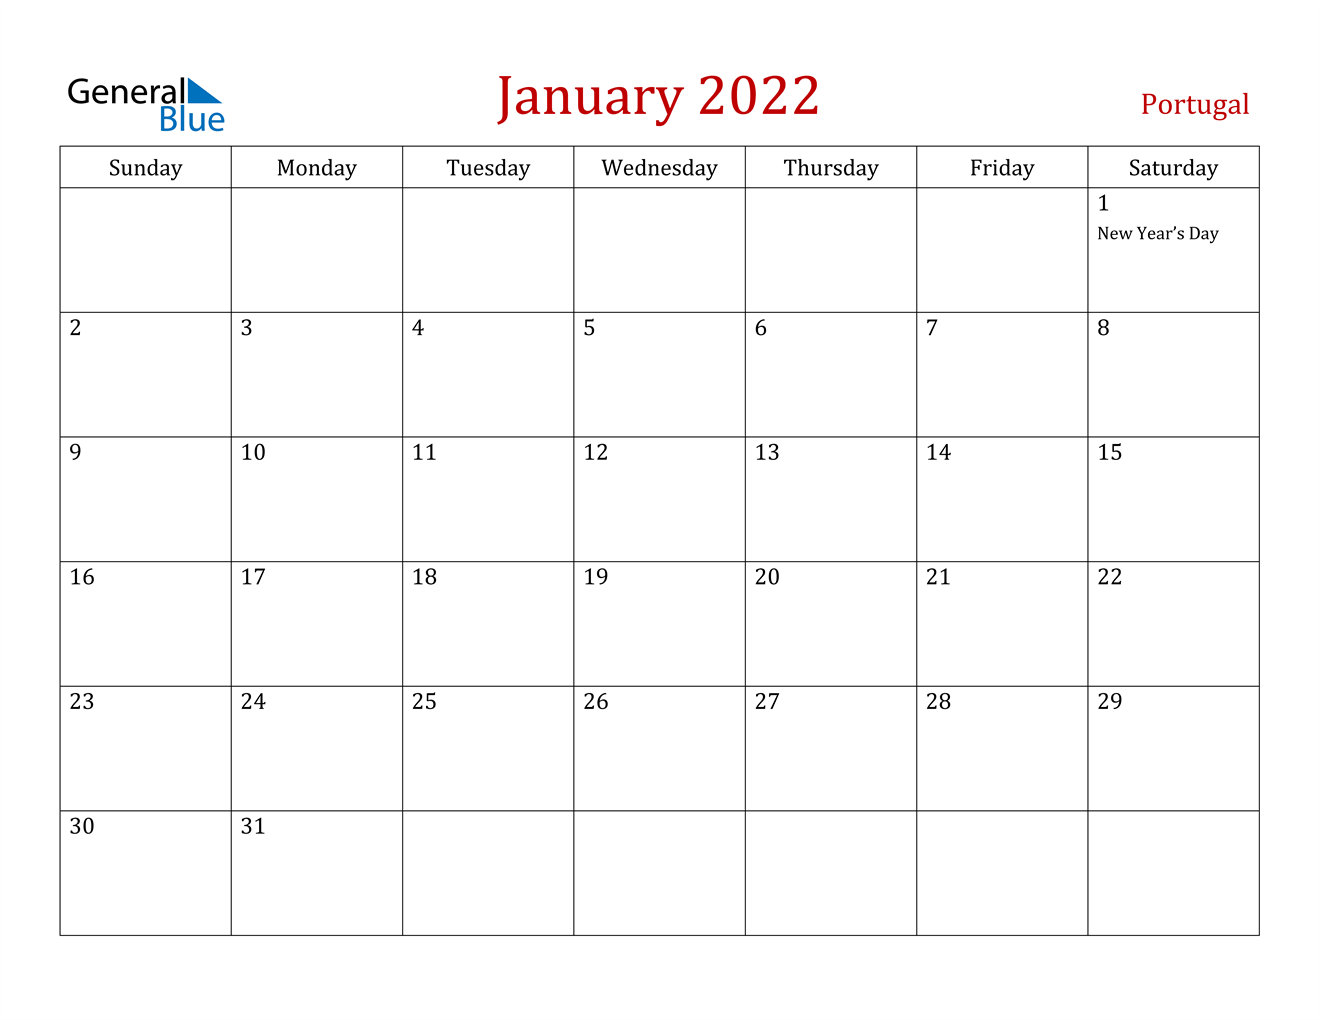 January 2022 Calendar - Portugal